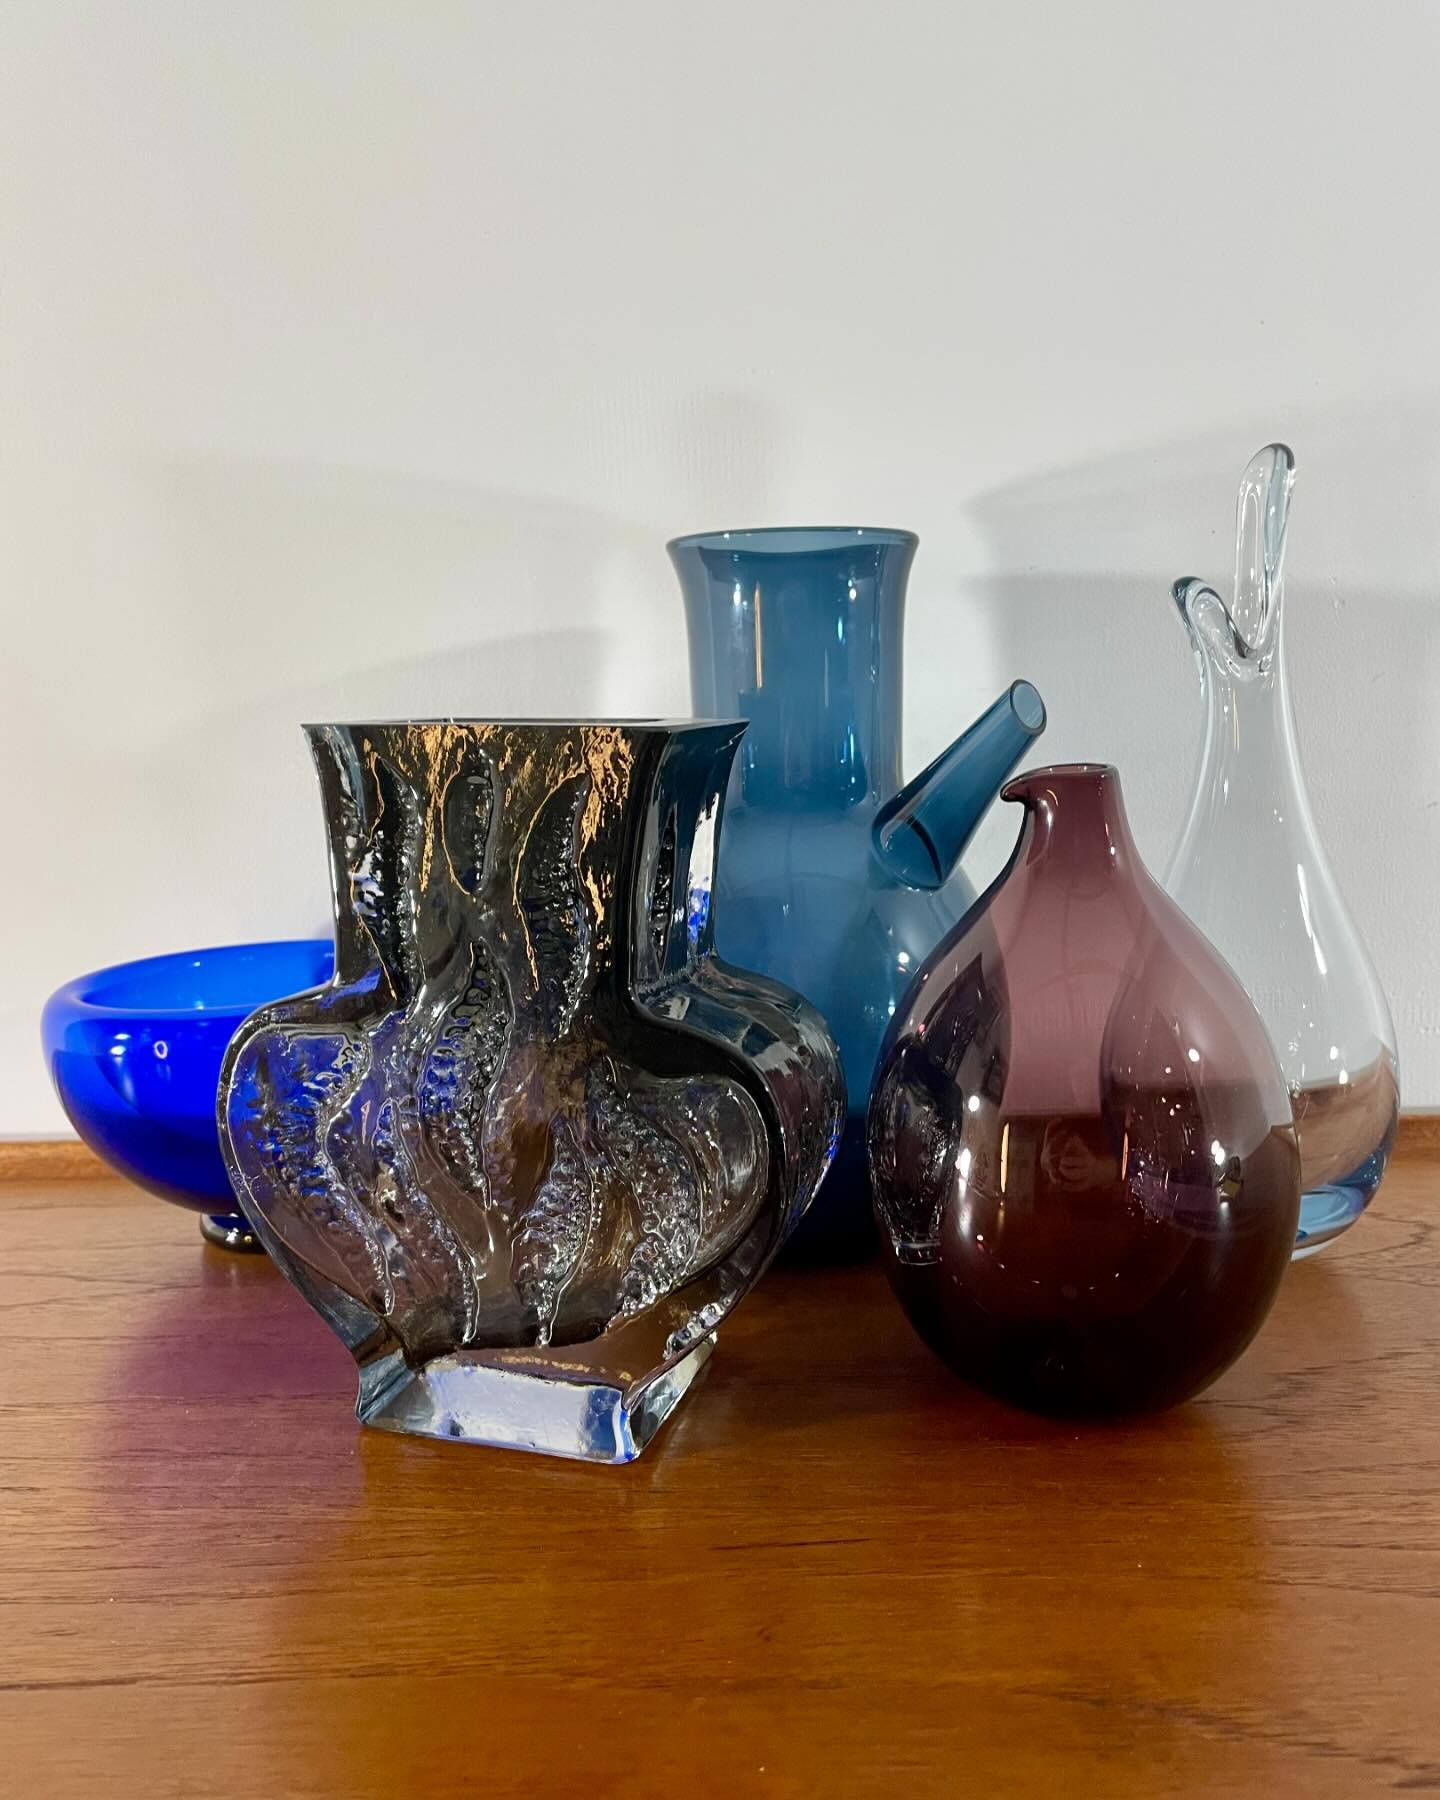 Ingridglas, Sarpaneva, Holmegaard.
#scandinavianglass #midcenturyglass #collectingglass #beakers 
#penticton #naramata #vintage #heartsdesire